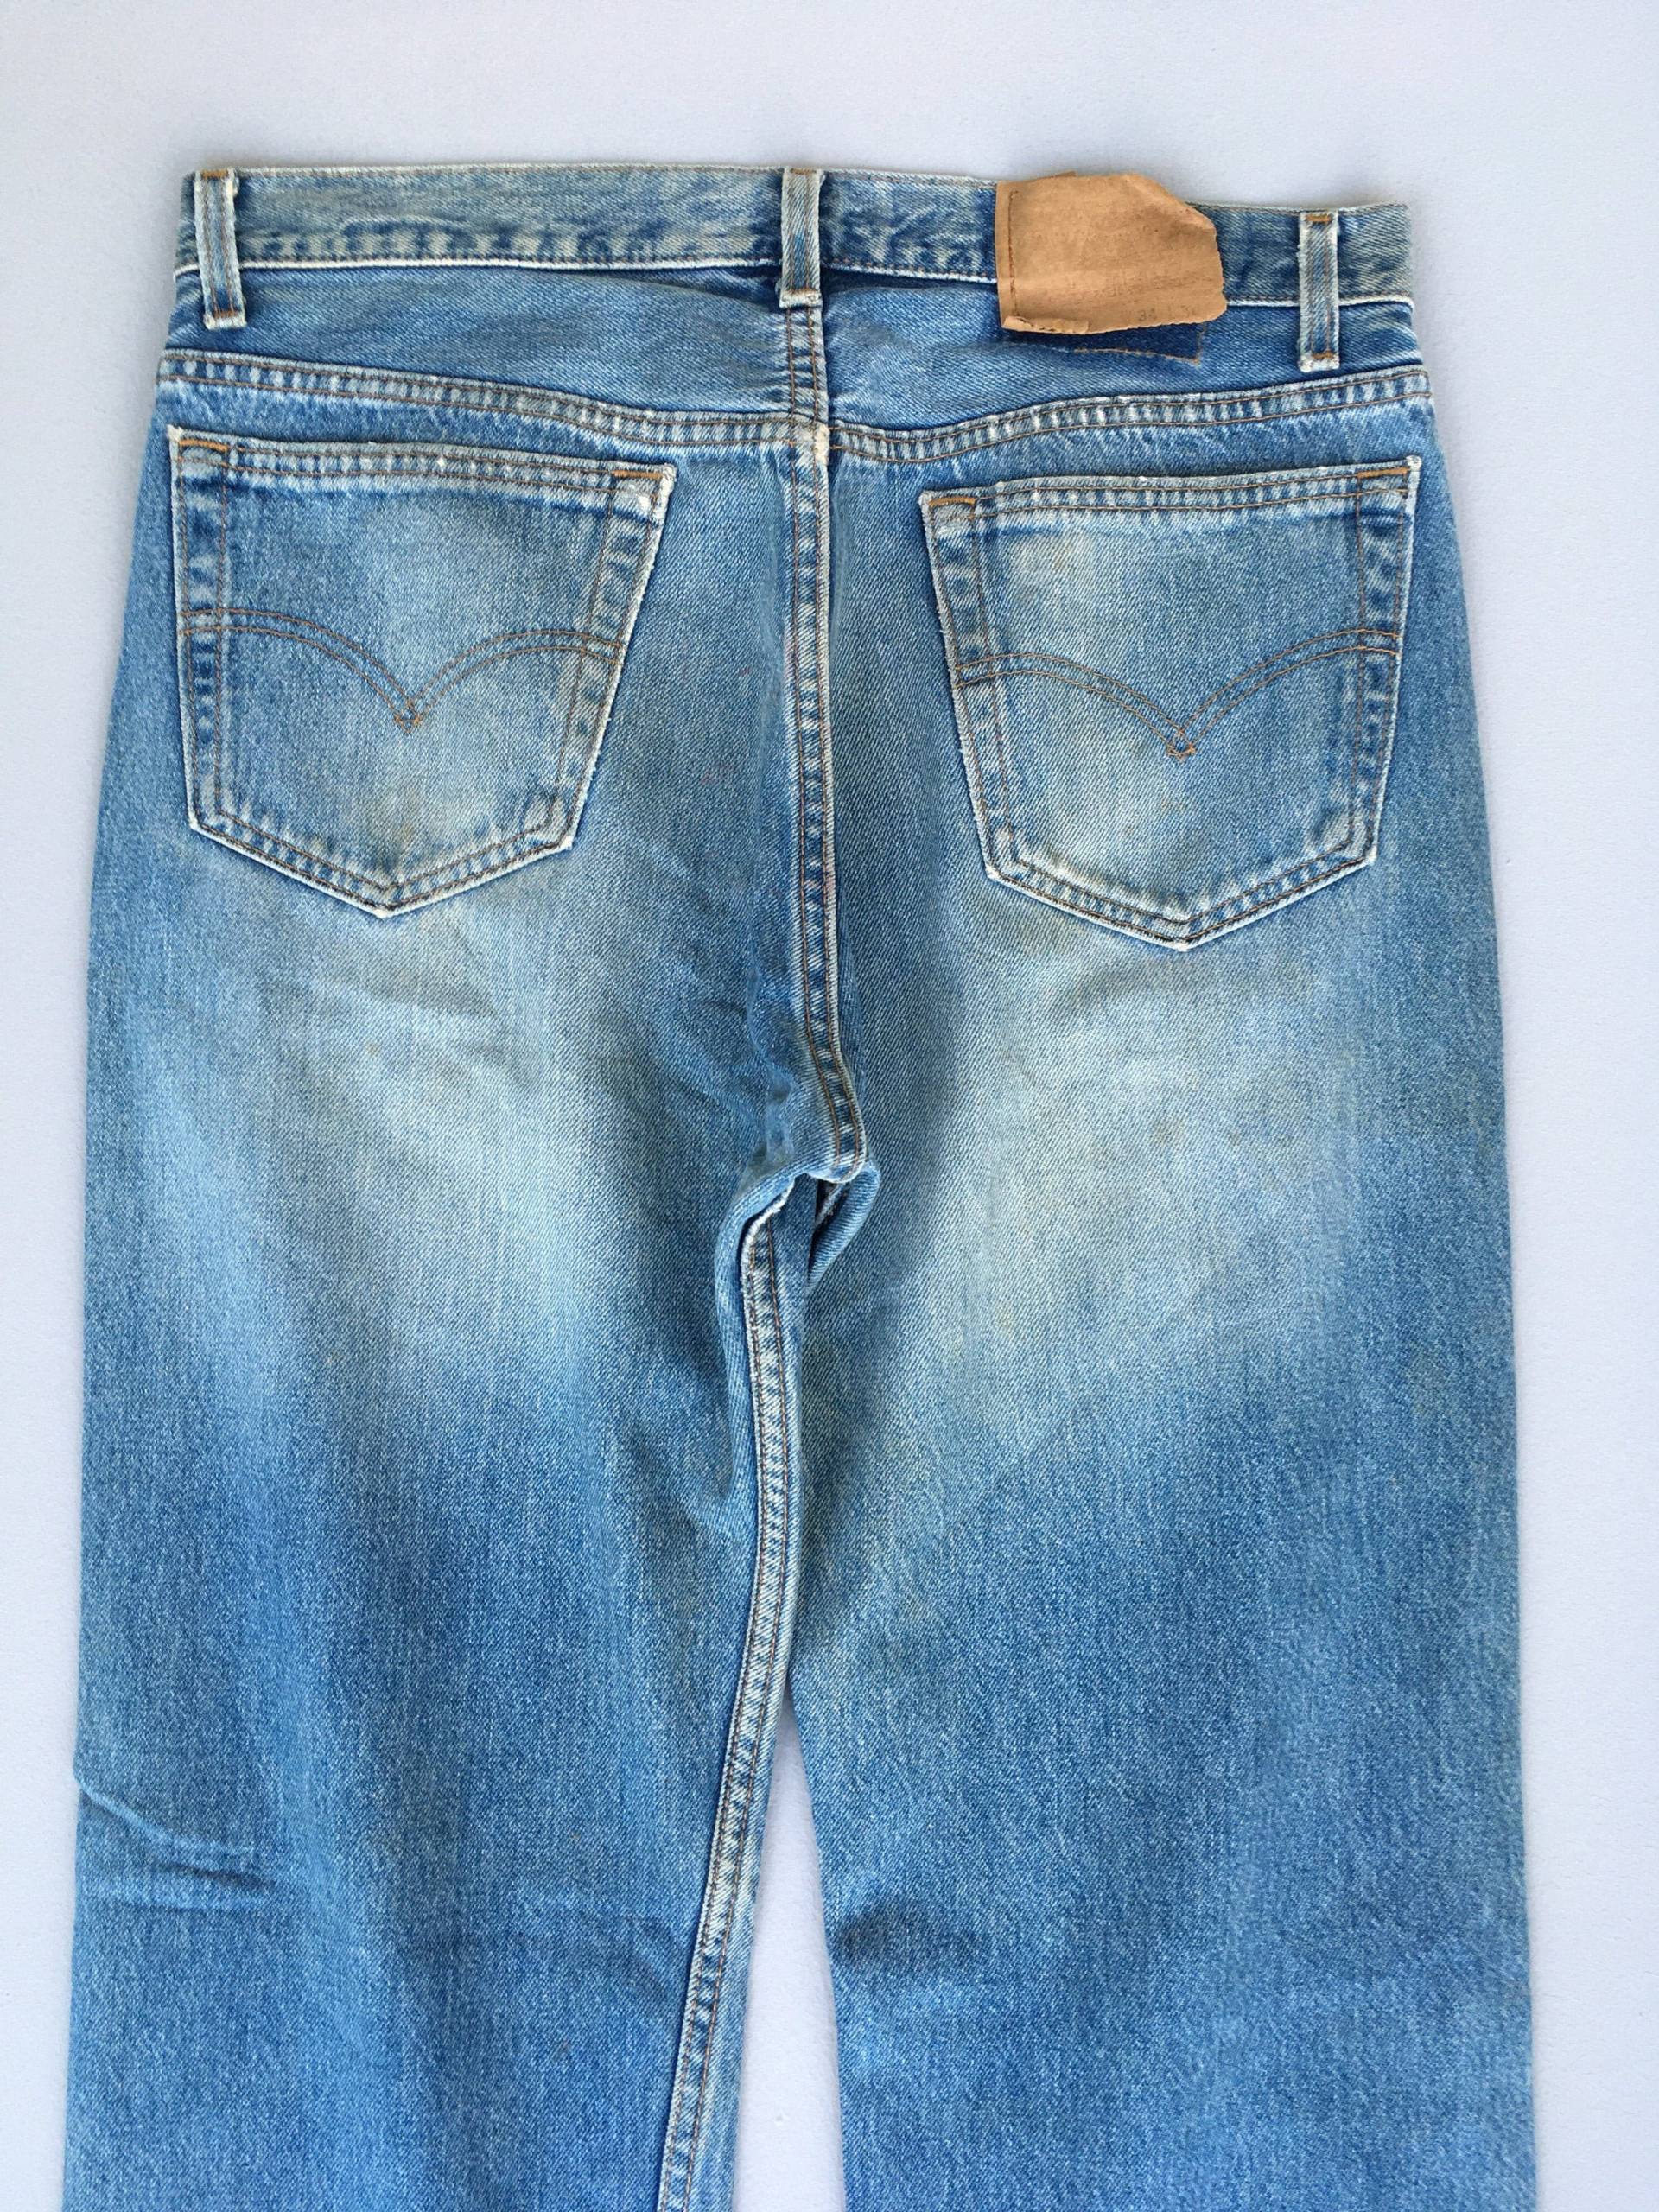 Größe 32x33.5 Vintage Levi's 501 Light Wash Jeans Hohe Taille 1990Er Jahre Faded Dirty Denim Distressed W32 von AxeVin